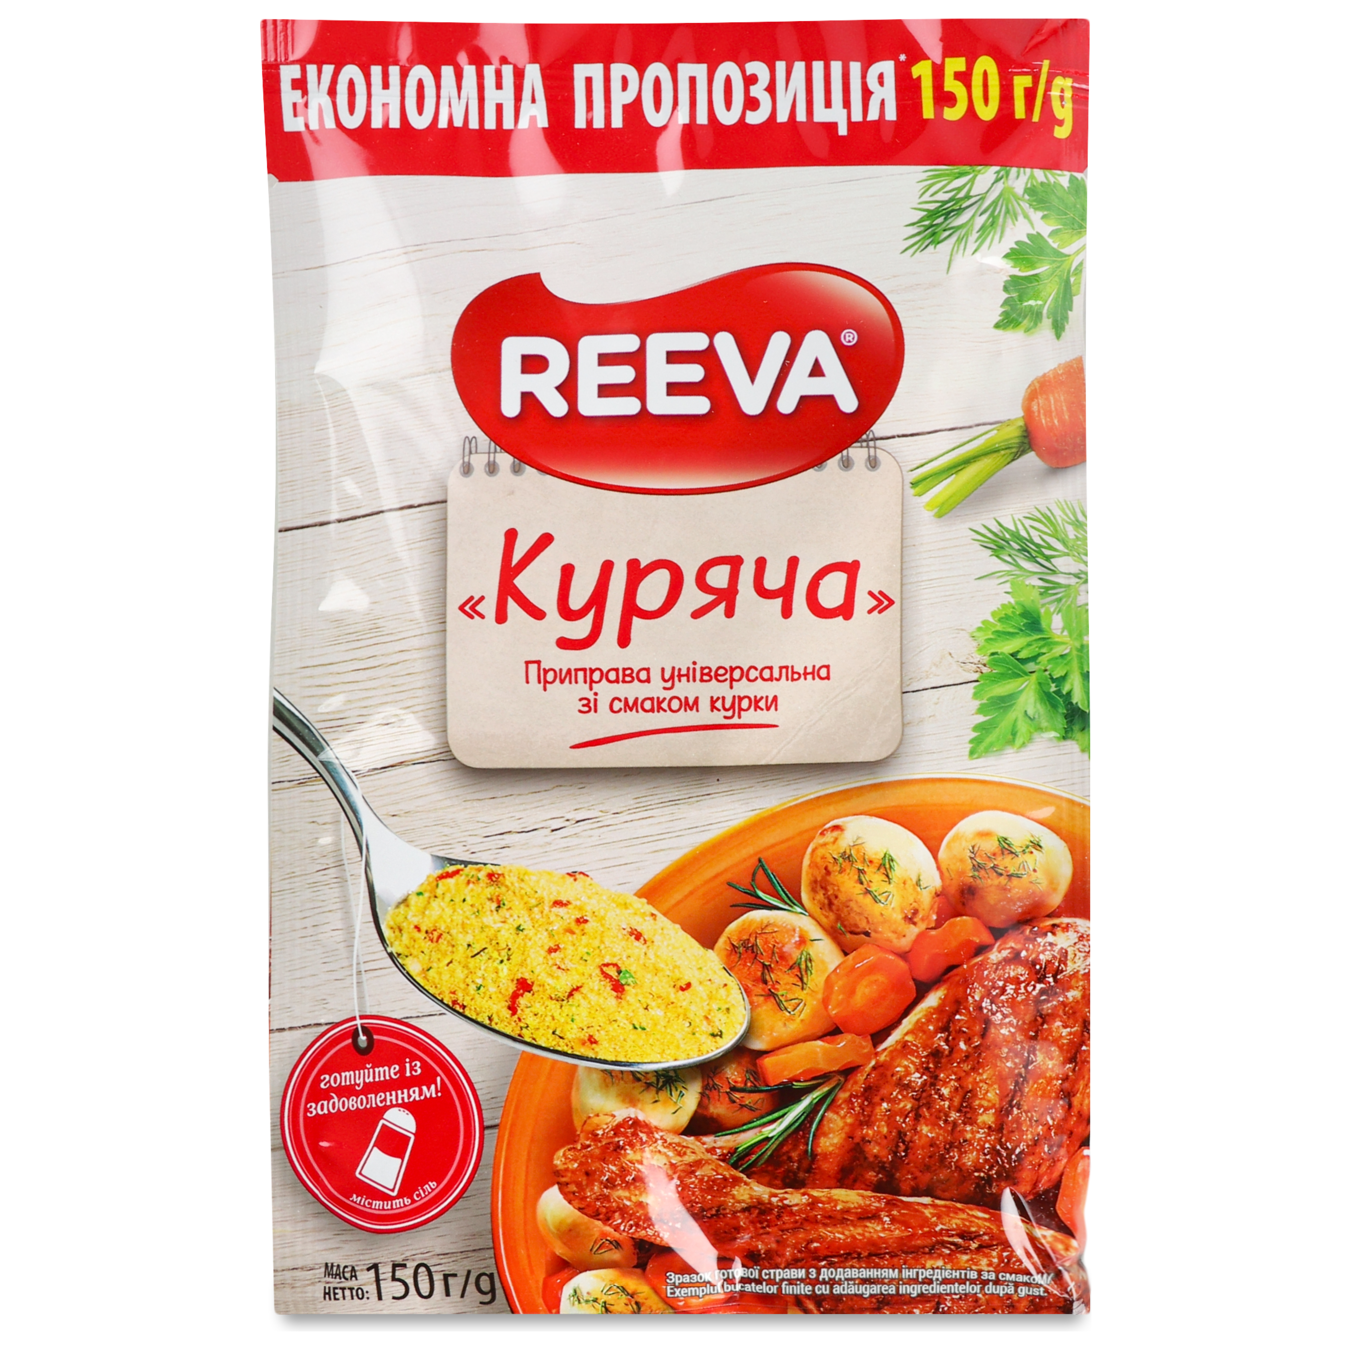 Reeva universal seasoning with chicken flavor 150g 2